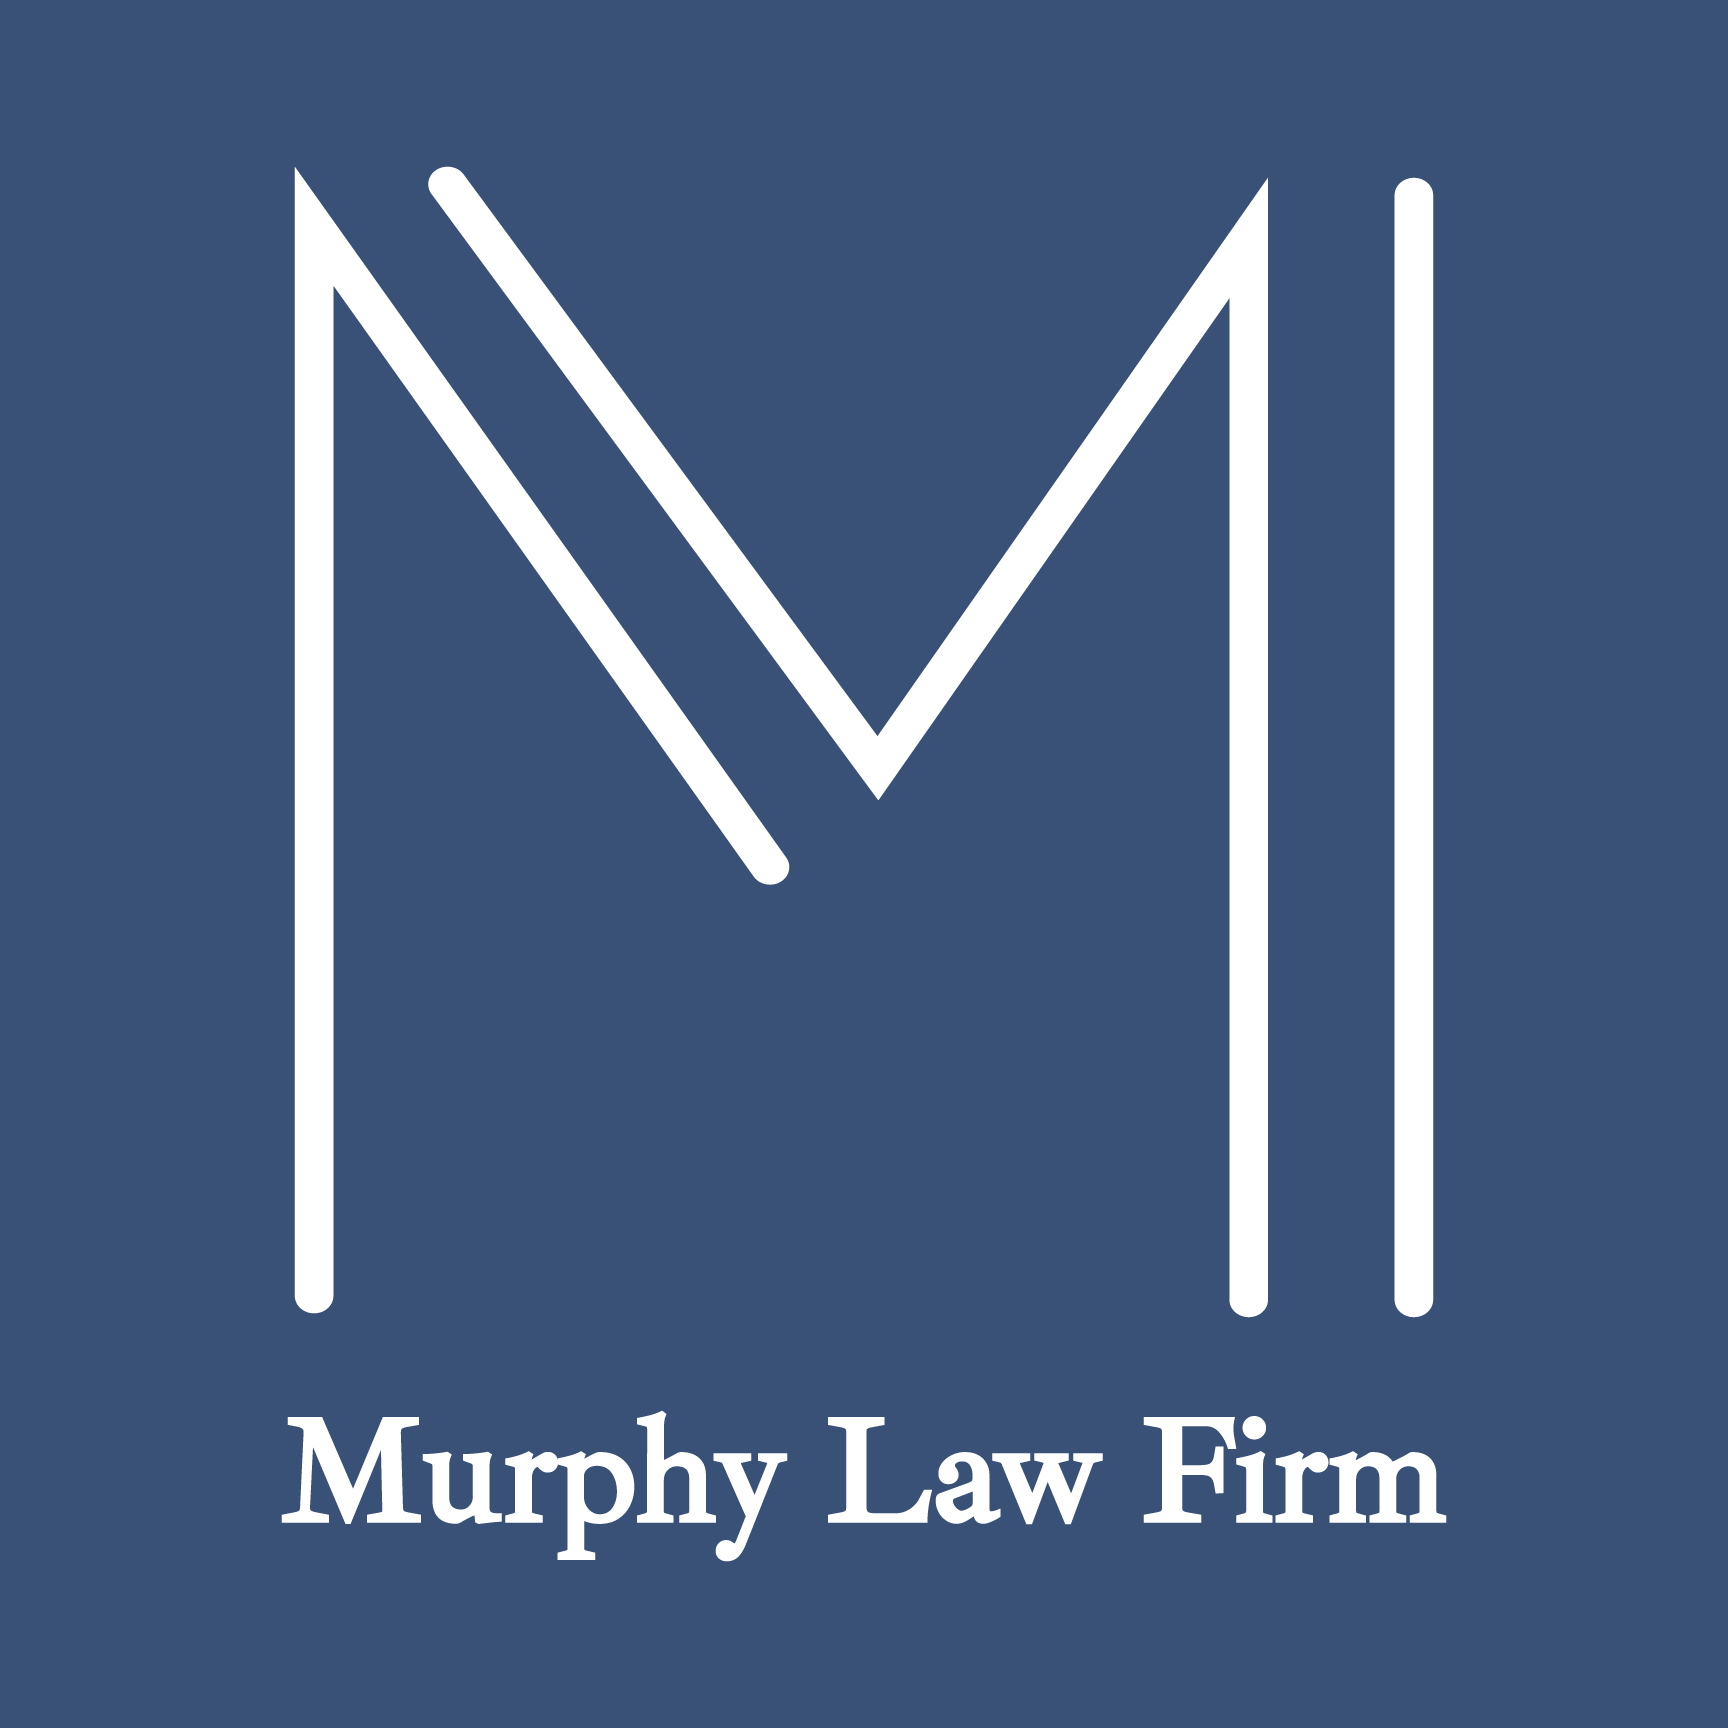 MurphyLawFirm Logo